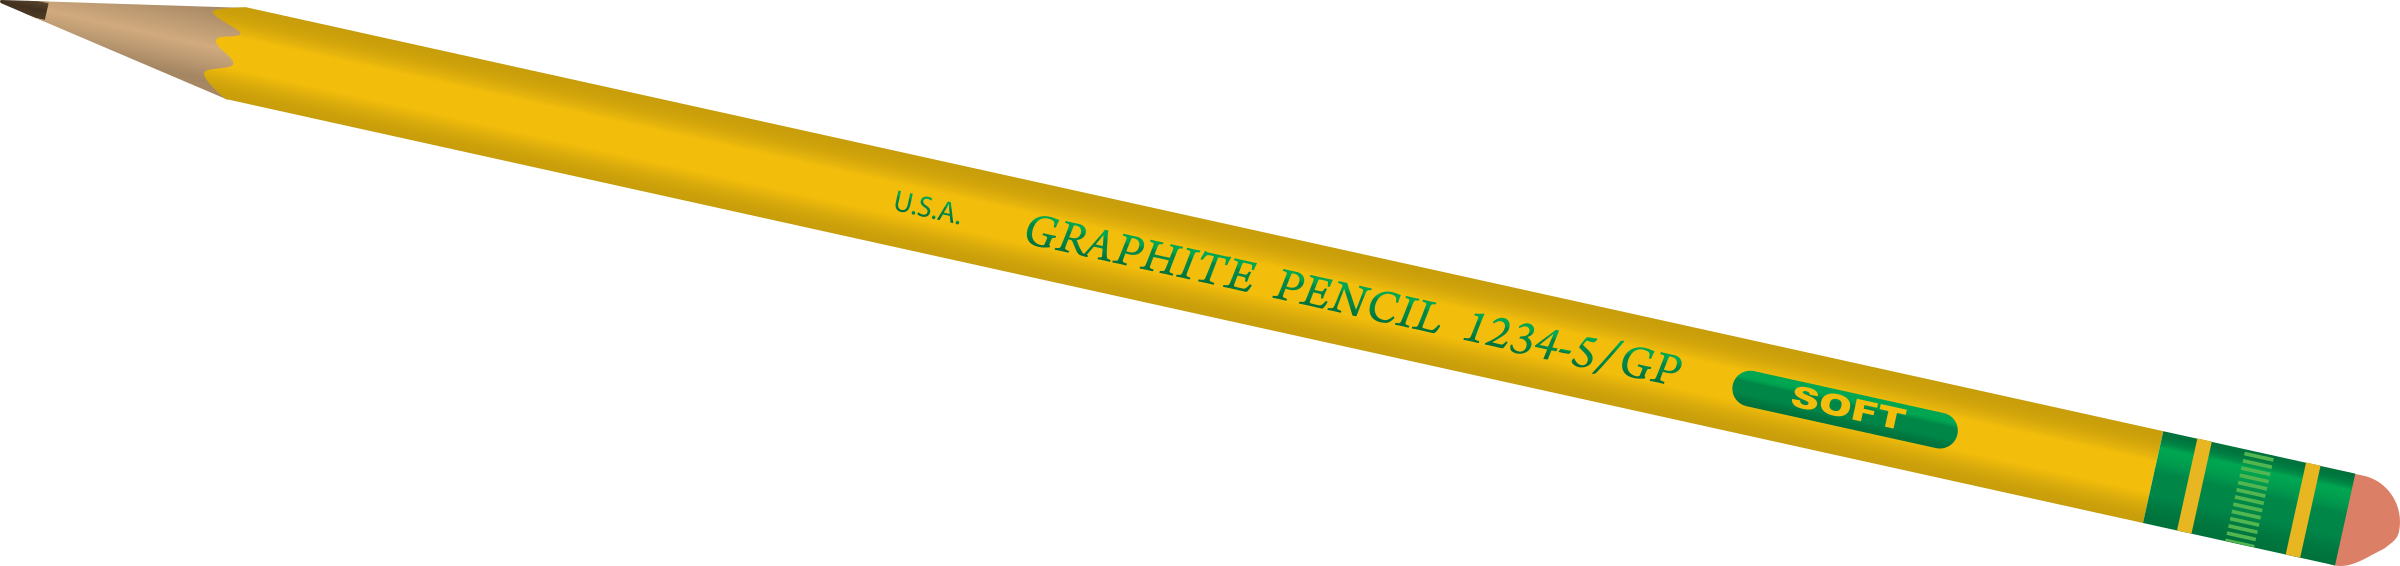 pencil clipart transparent 20 free Cliparts | Download images on ... Pen Circle Transparent Background